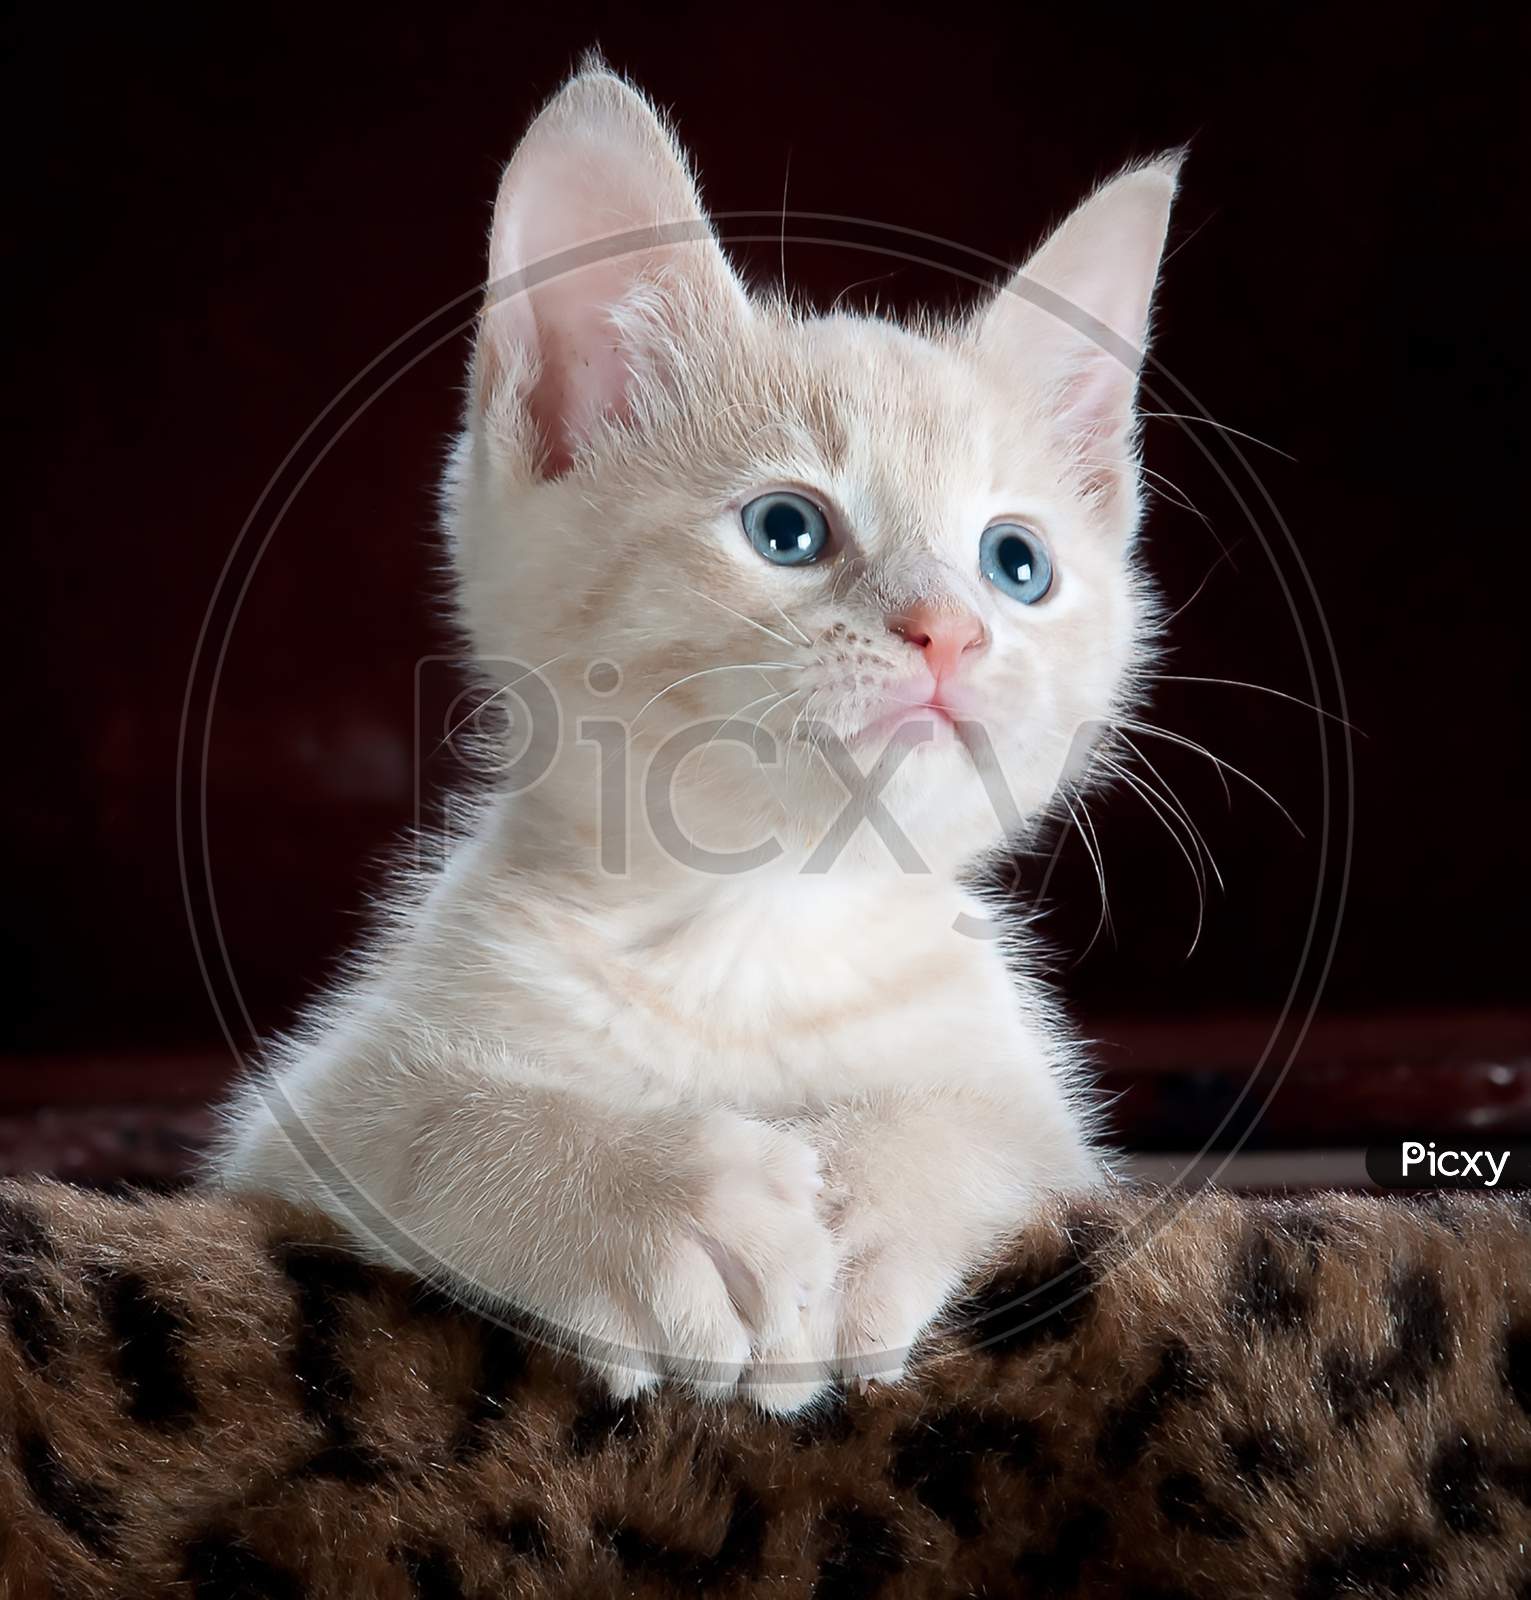 White Kitten with blue eyes on Brown & Black Leopard Print Textile